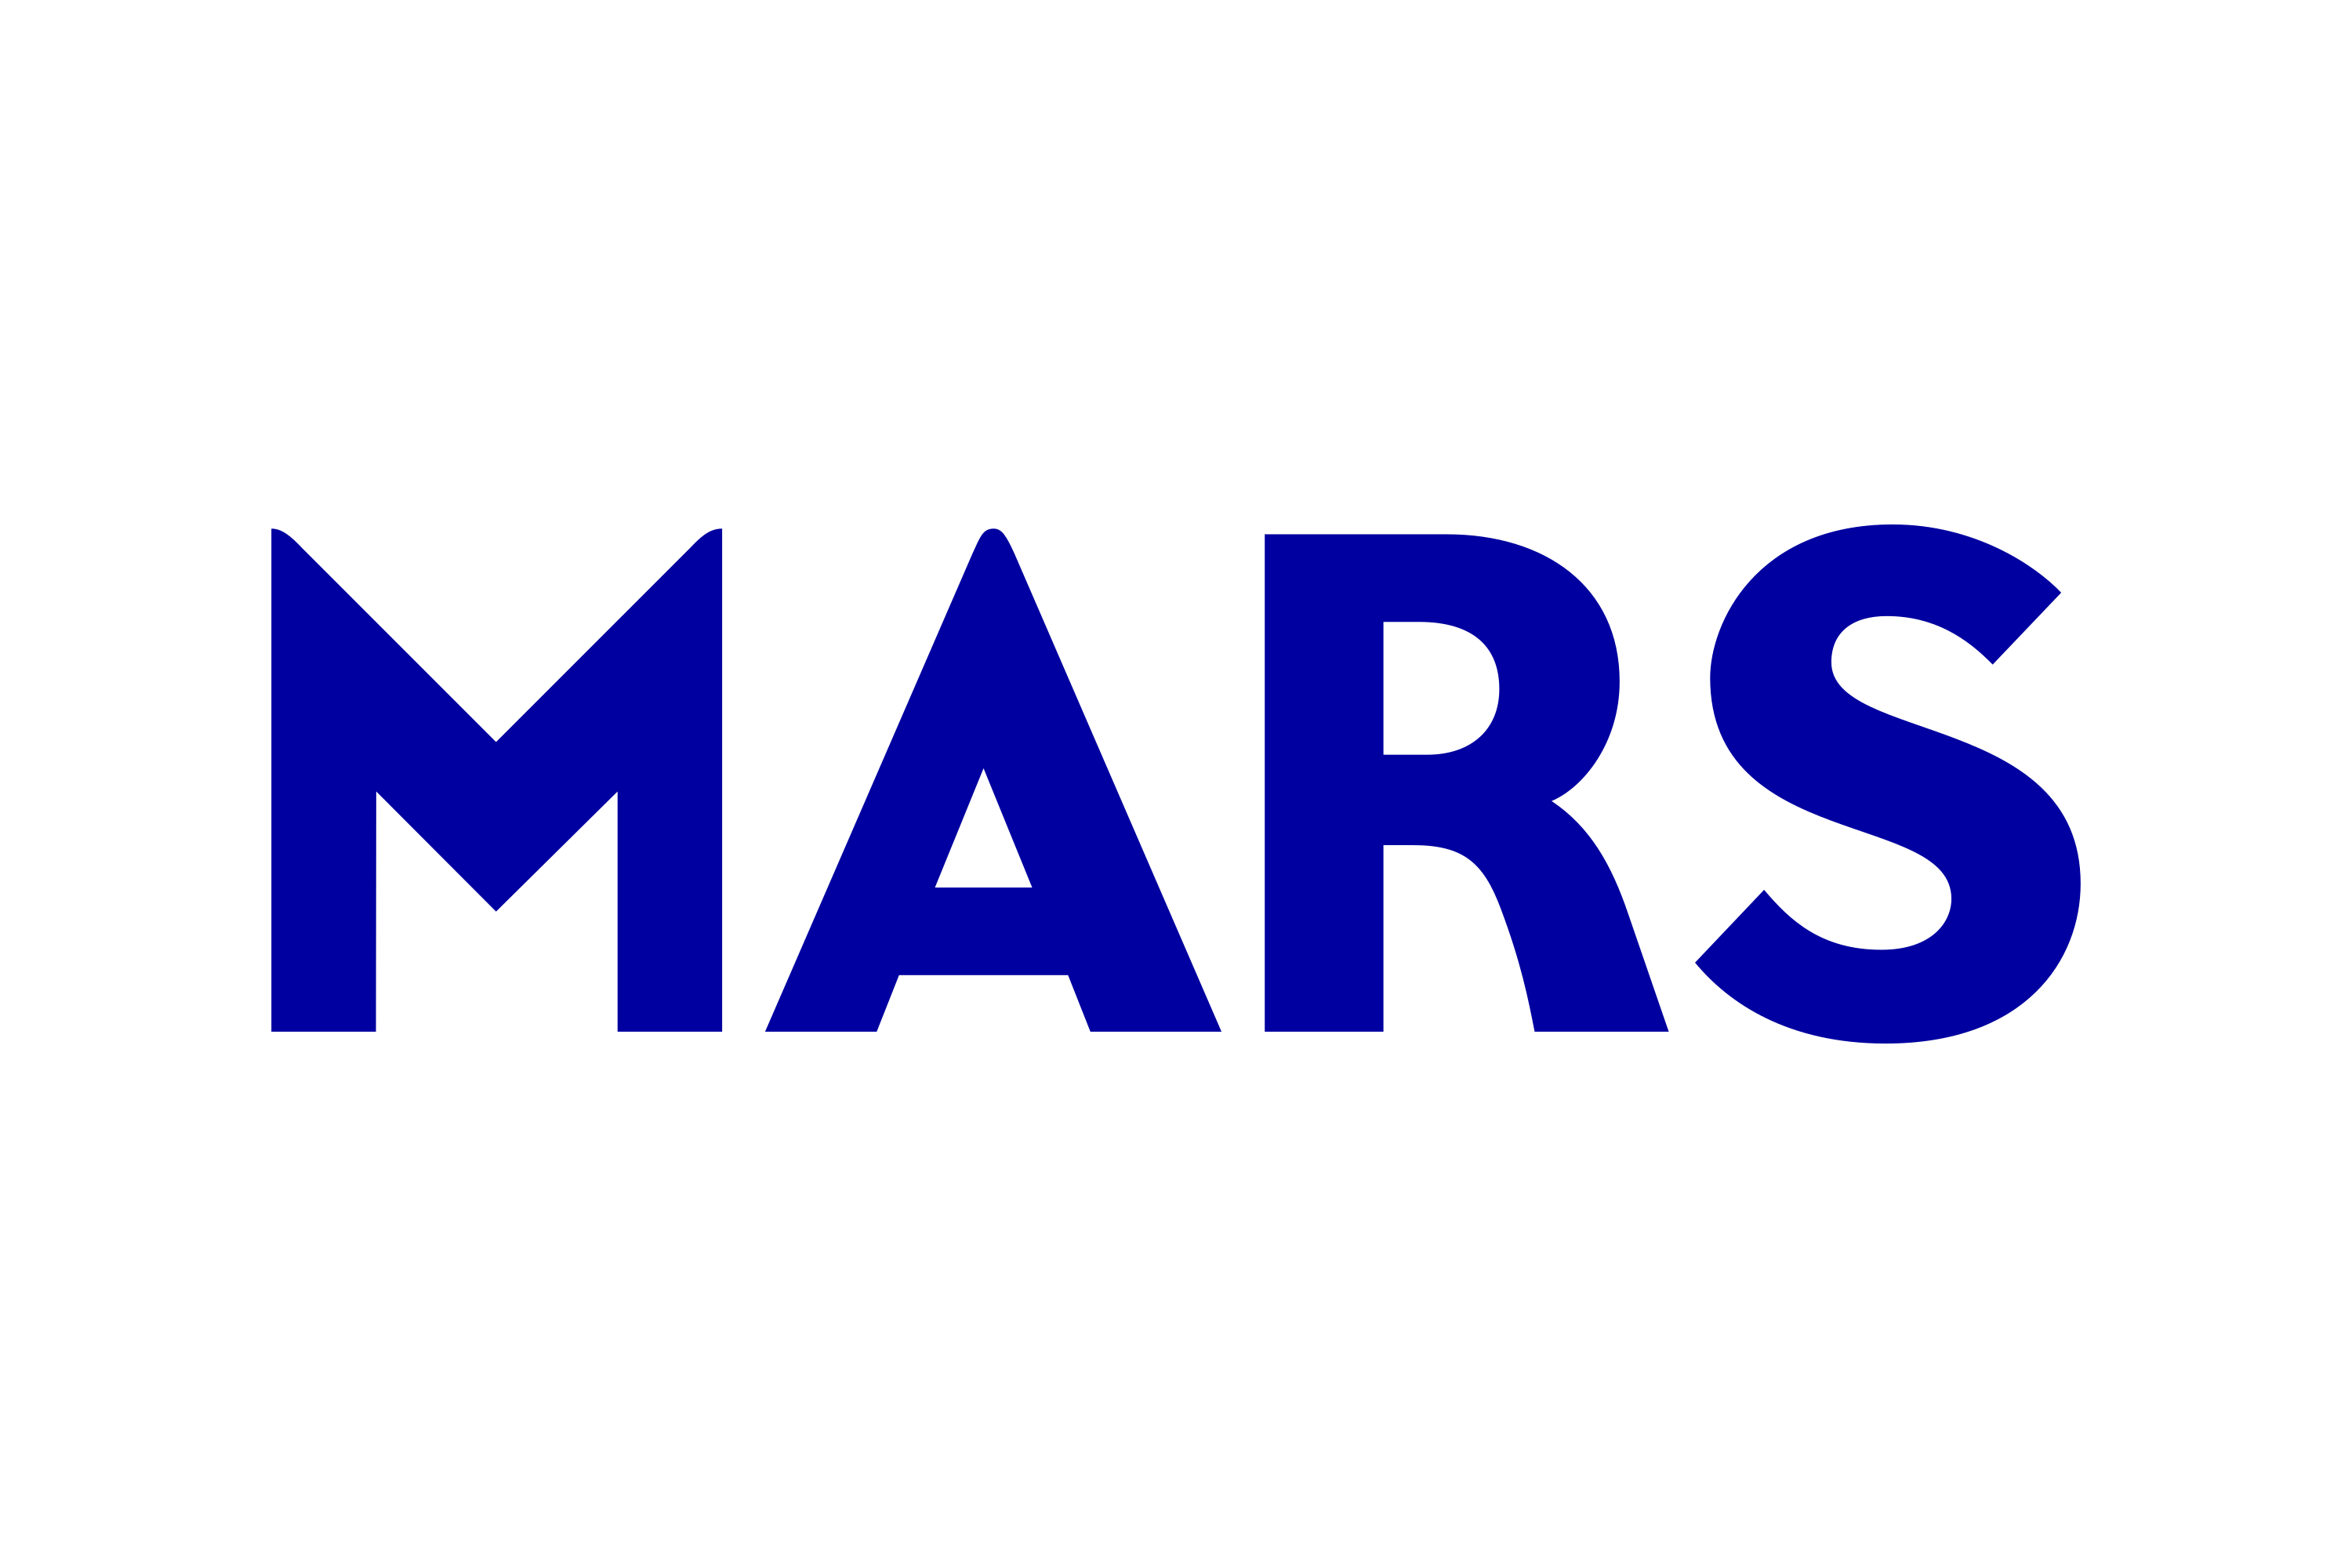 Mars, Incorporated Logo